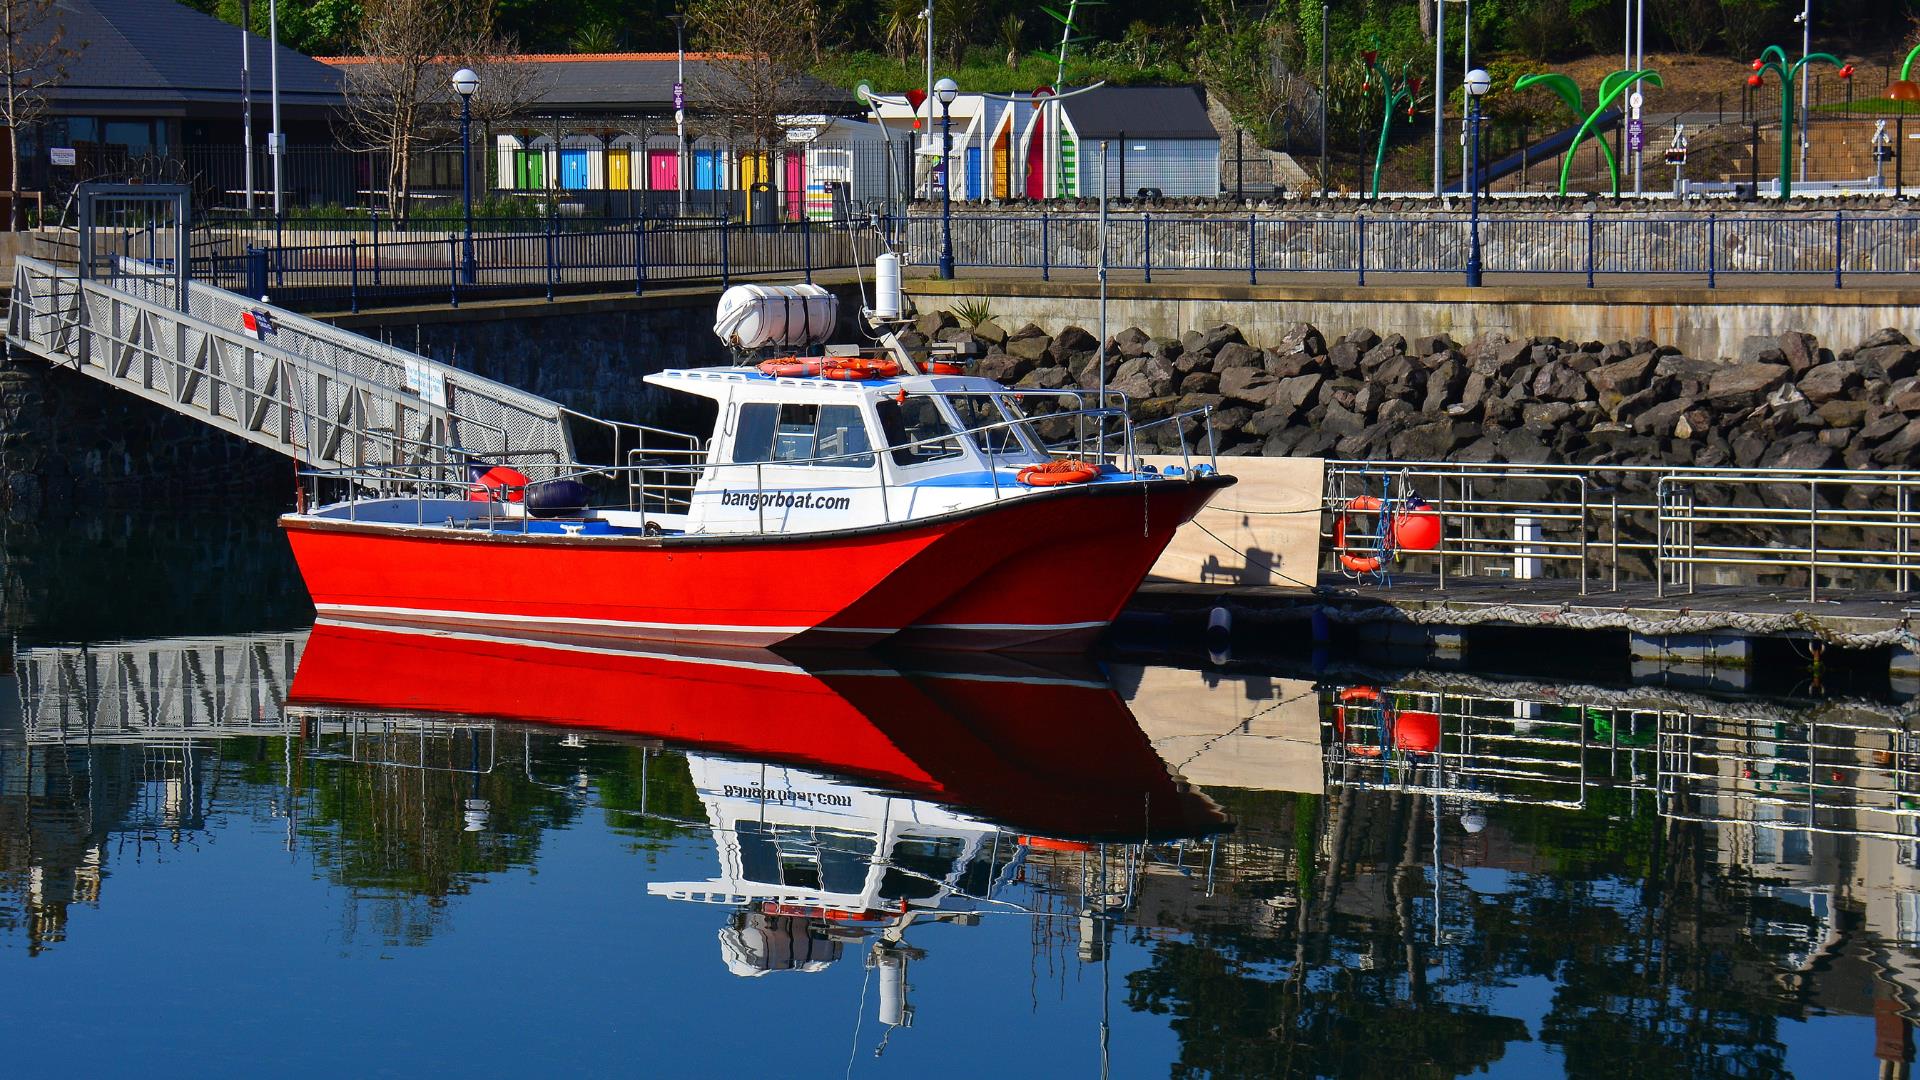 The Bangor Boat